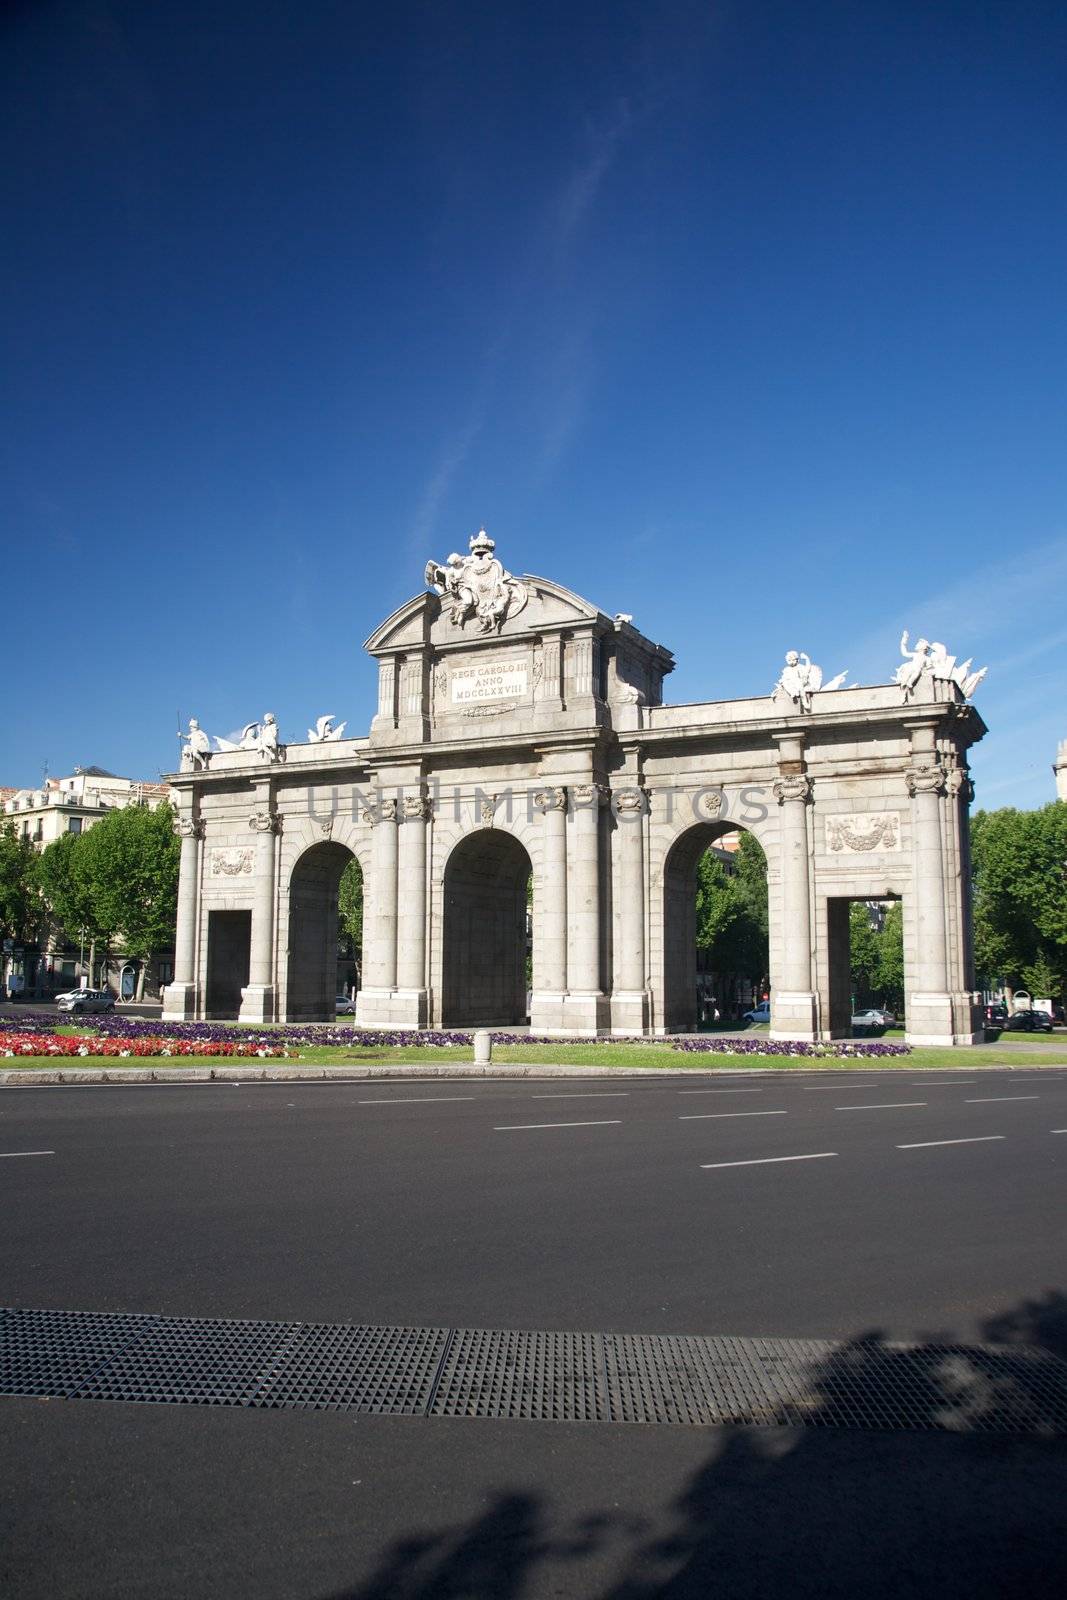 Puerta de Alcala monument at Madrid Spain